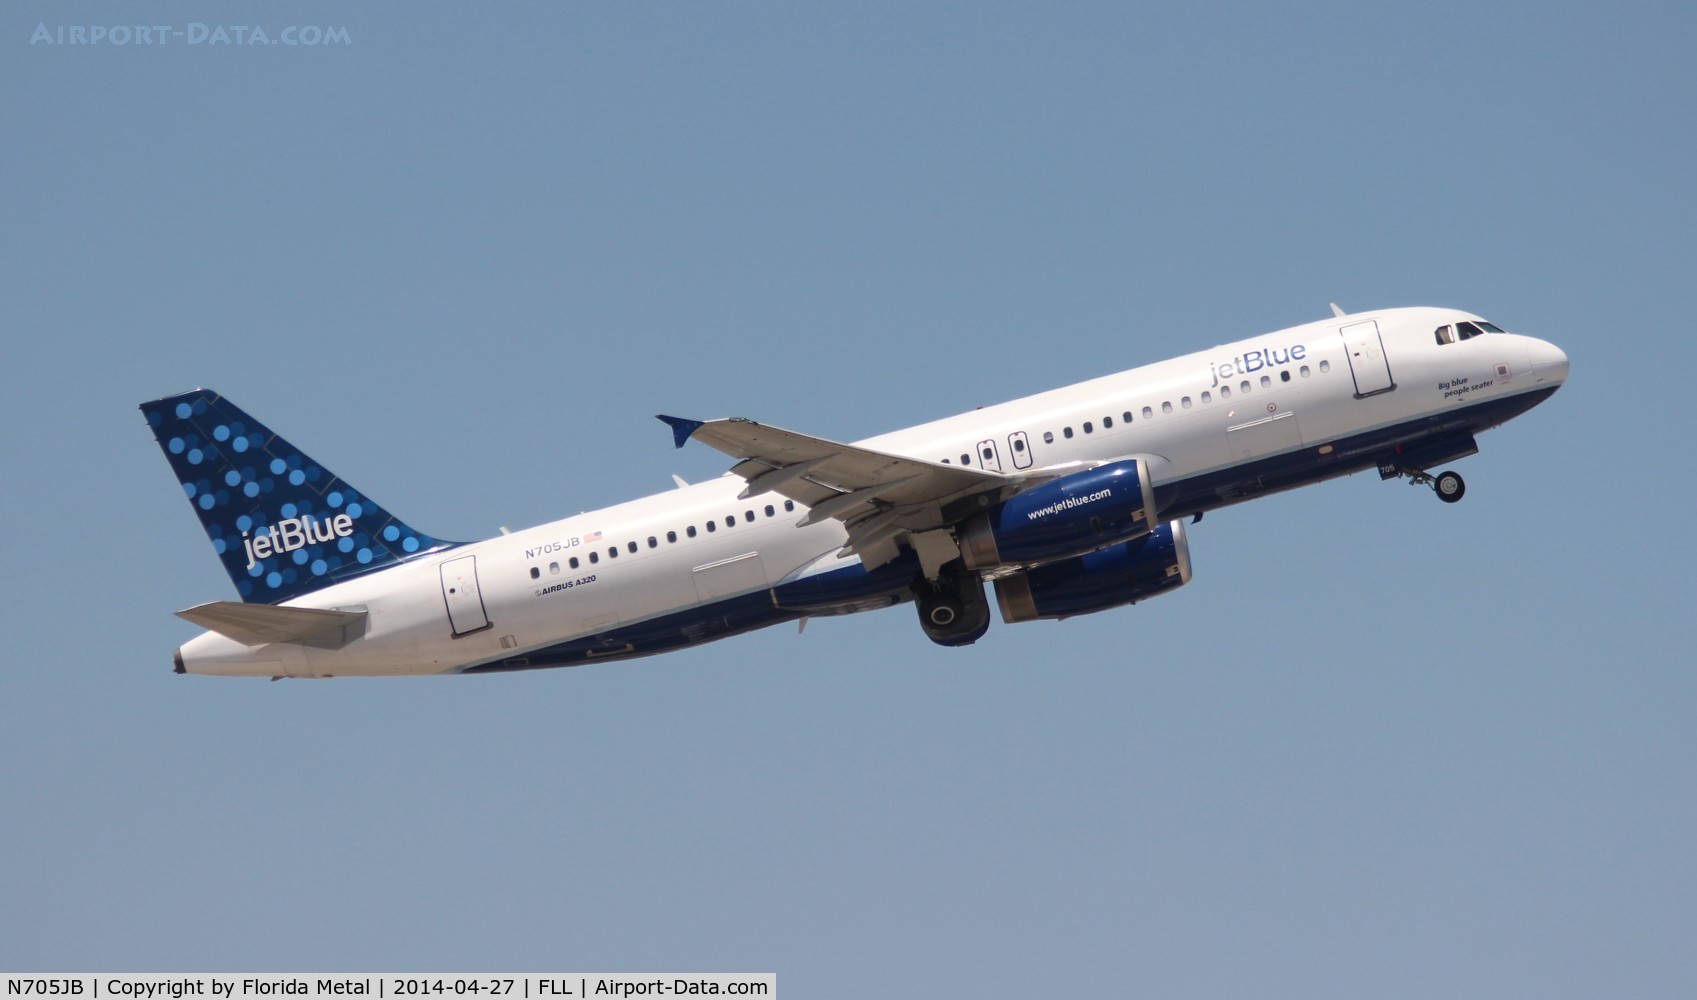 N705JB, 2008 Airbus A320-232 C/N 3416, Jet Blue